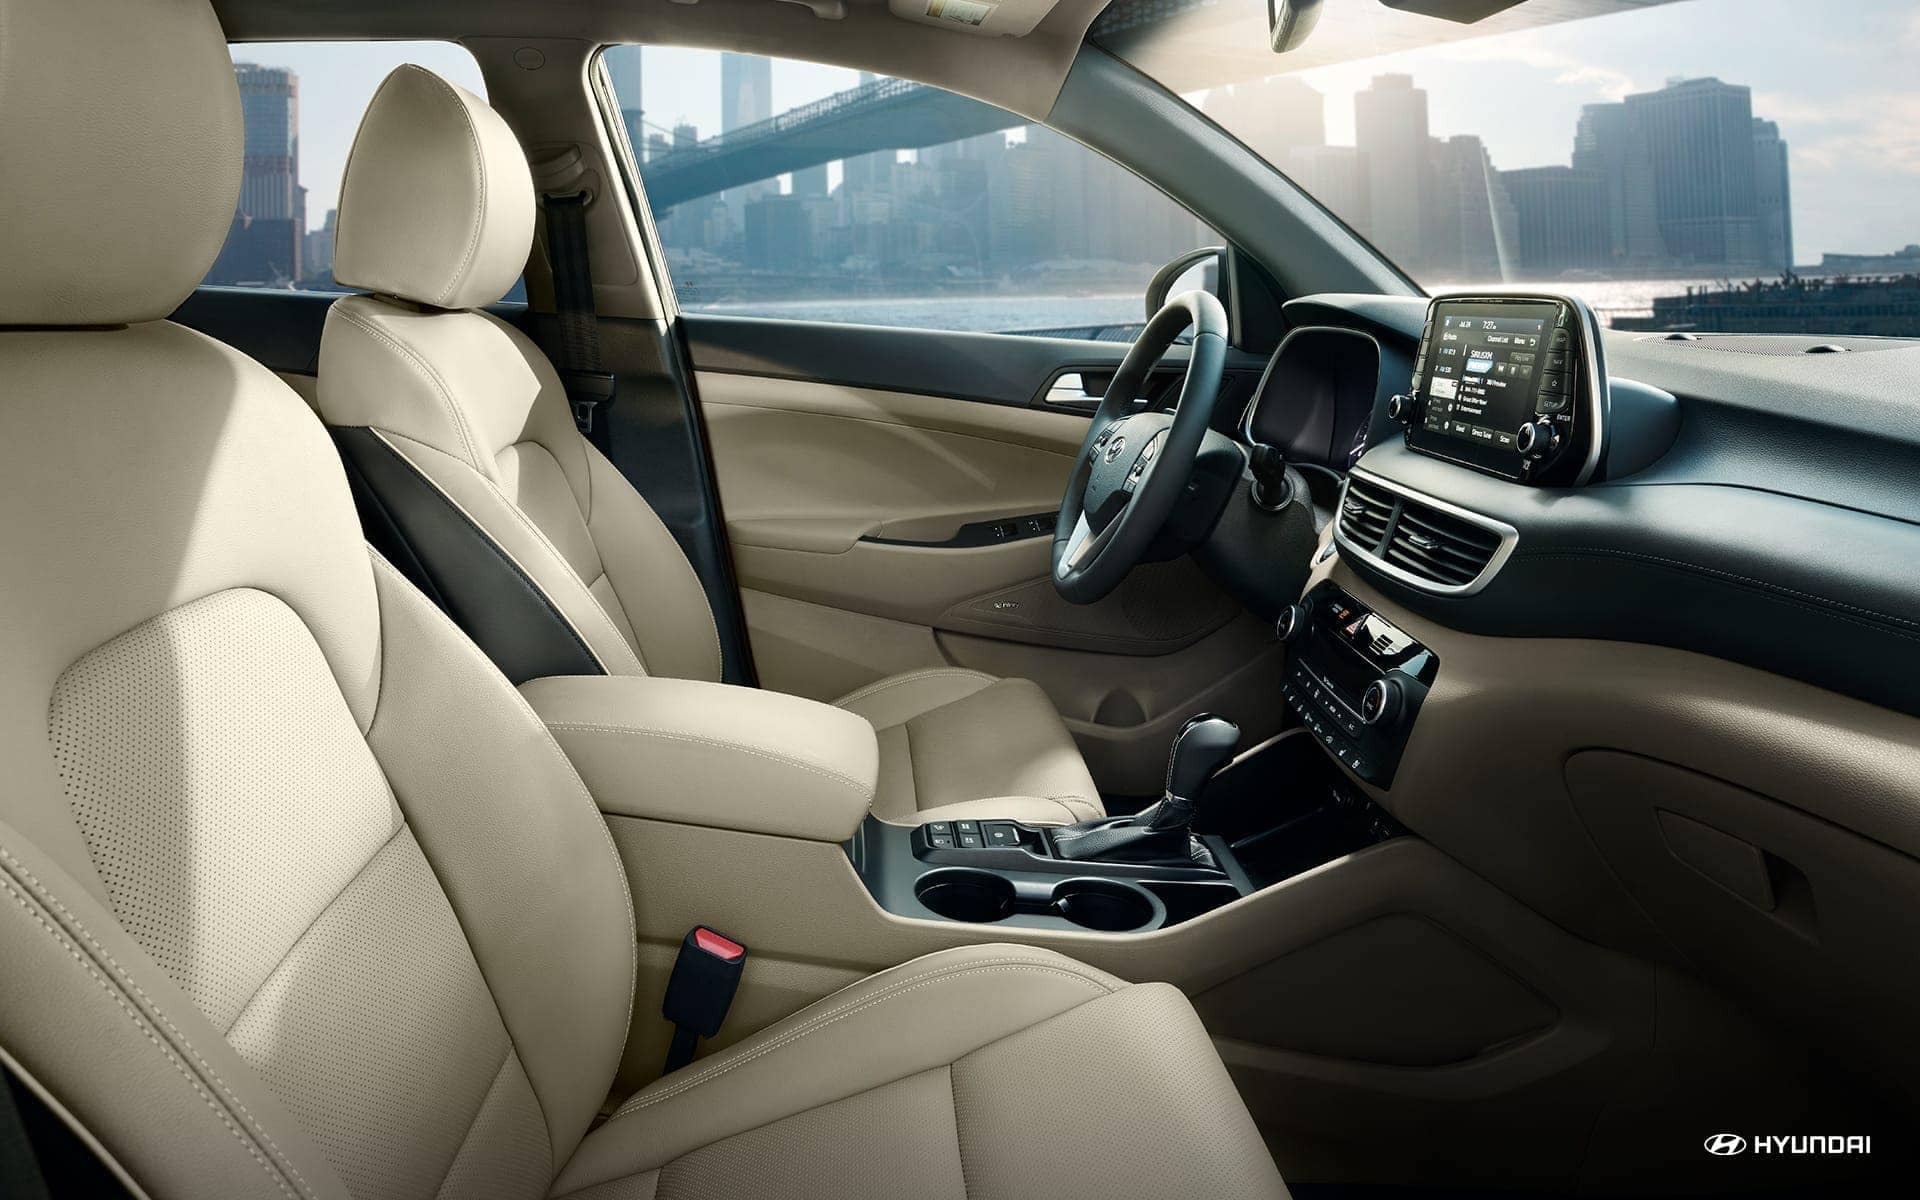 2020 Hyundai Tucson interior leather seats